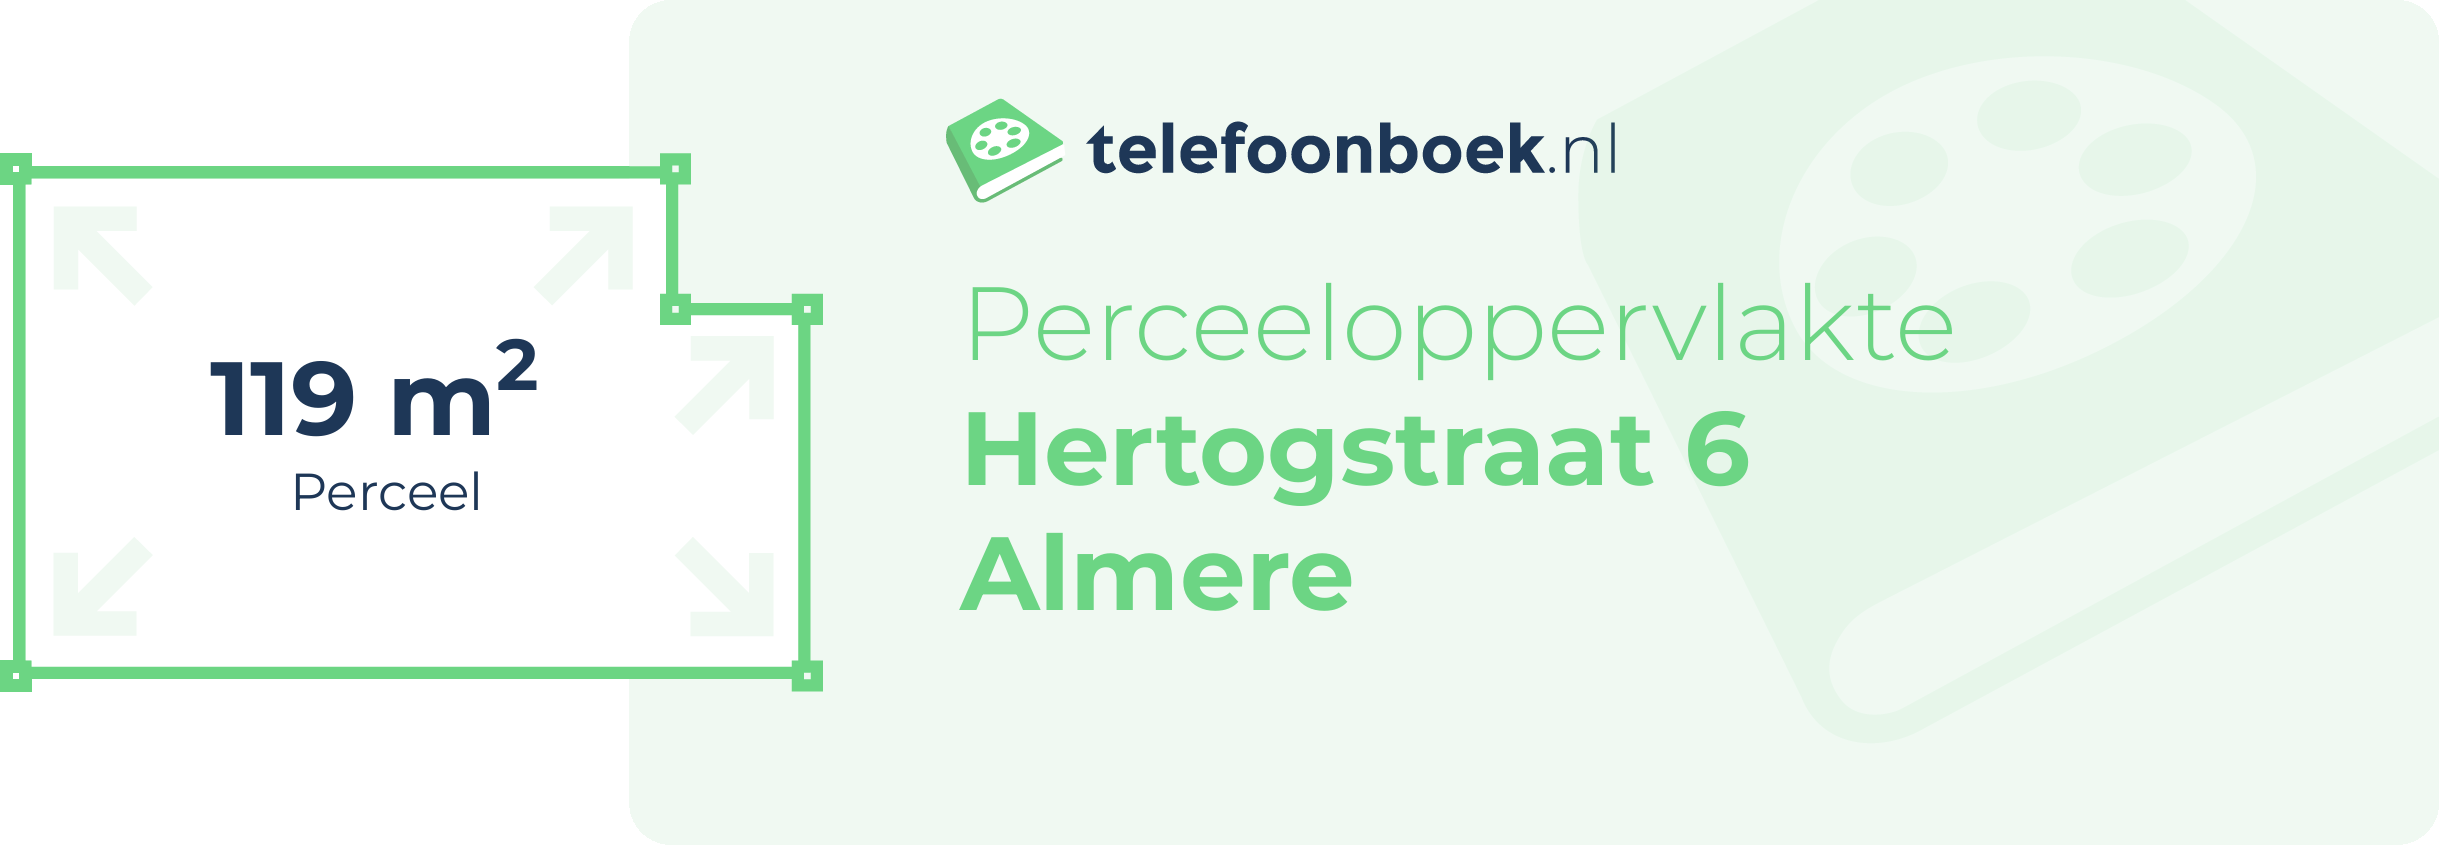 Perceeloppervlakte Hertogstraat 6 Almere